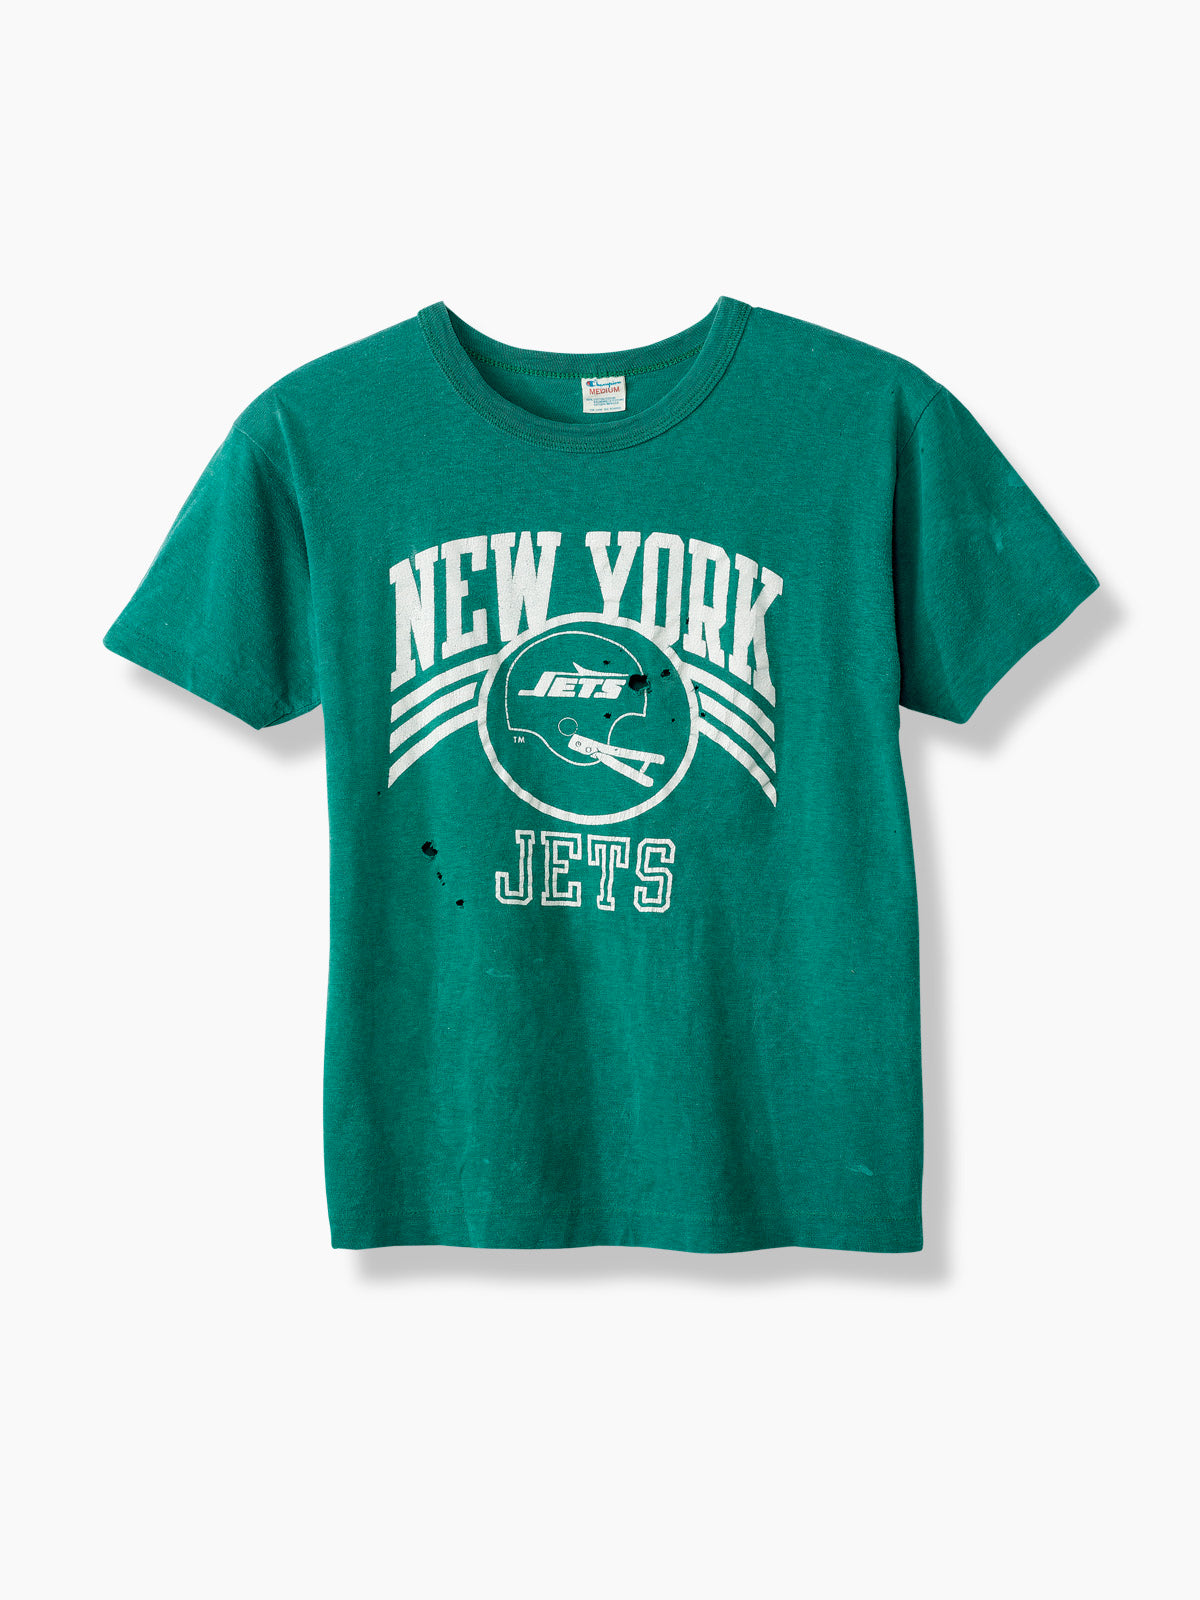 Vintage Sports T-Shirt - New York Jets 